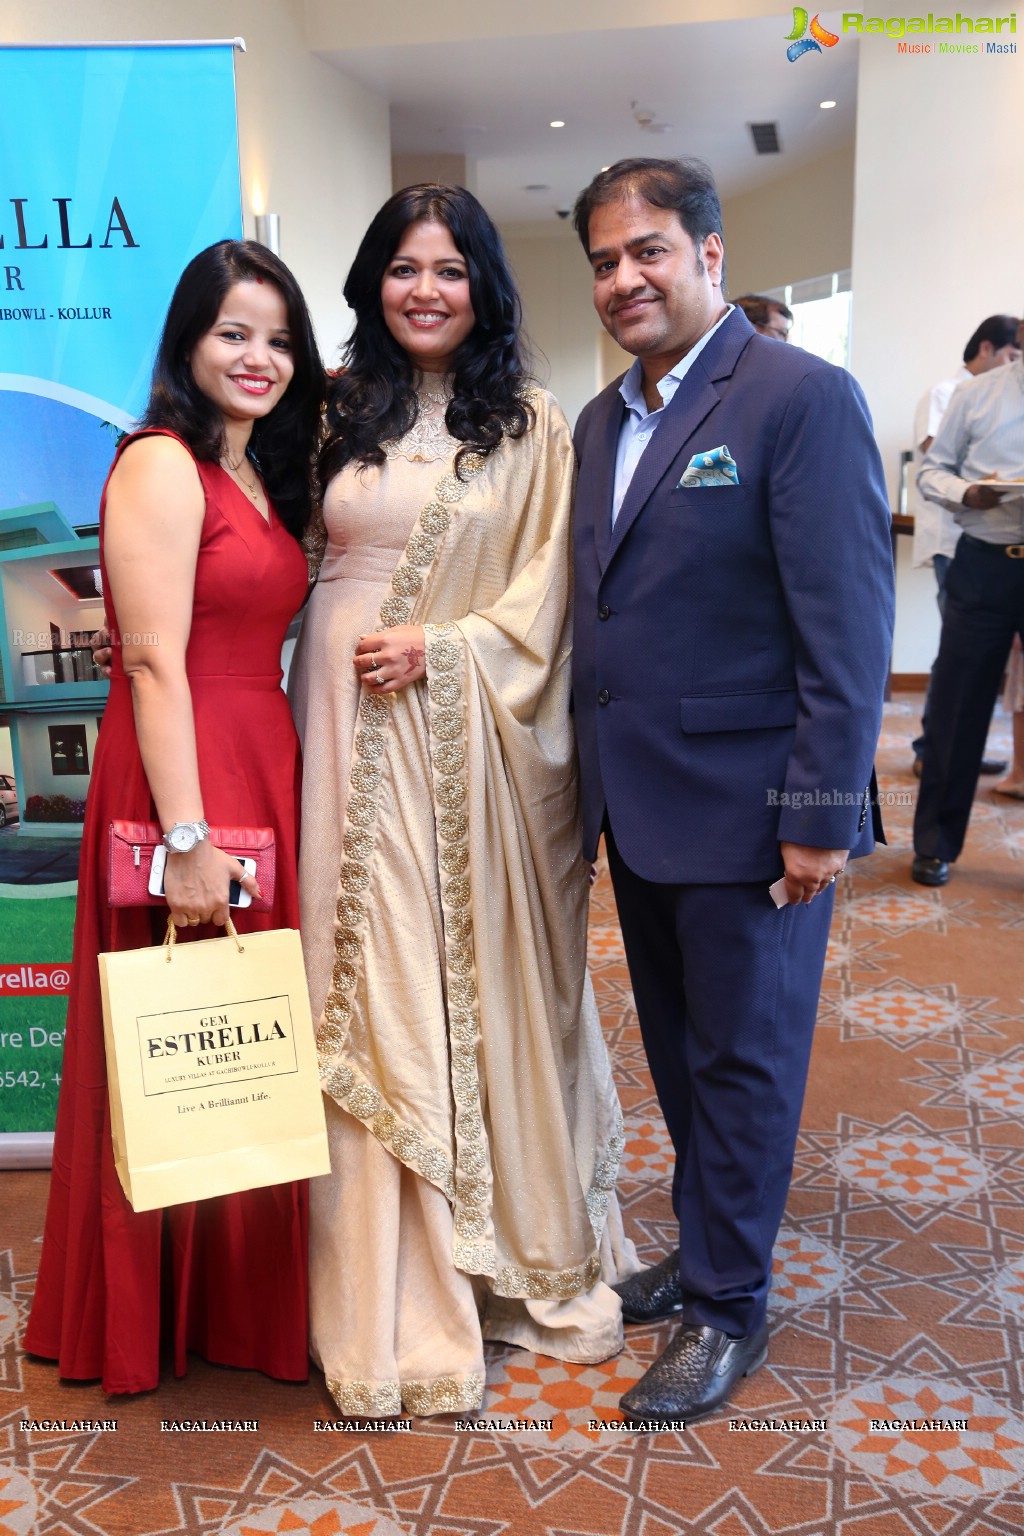 Gem Estrella Kuber Luxury Villas Launch Conference at The Hyatt Place